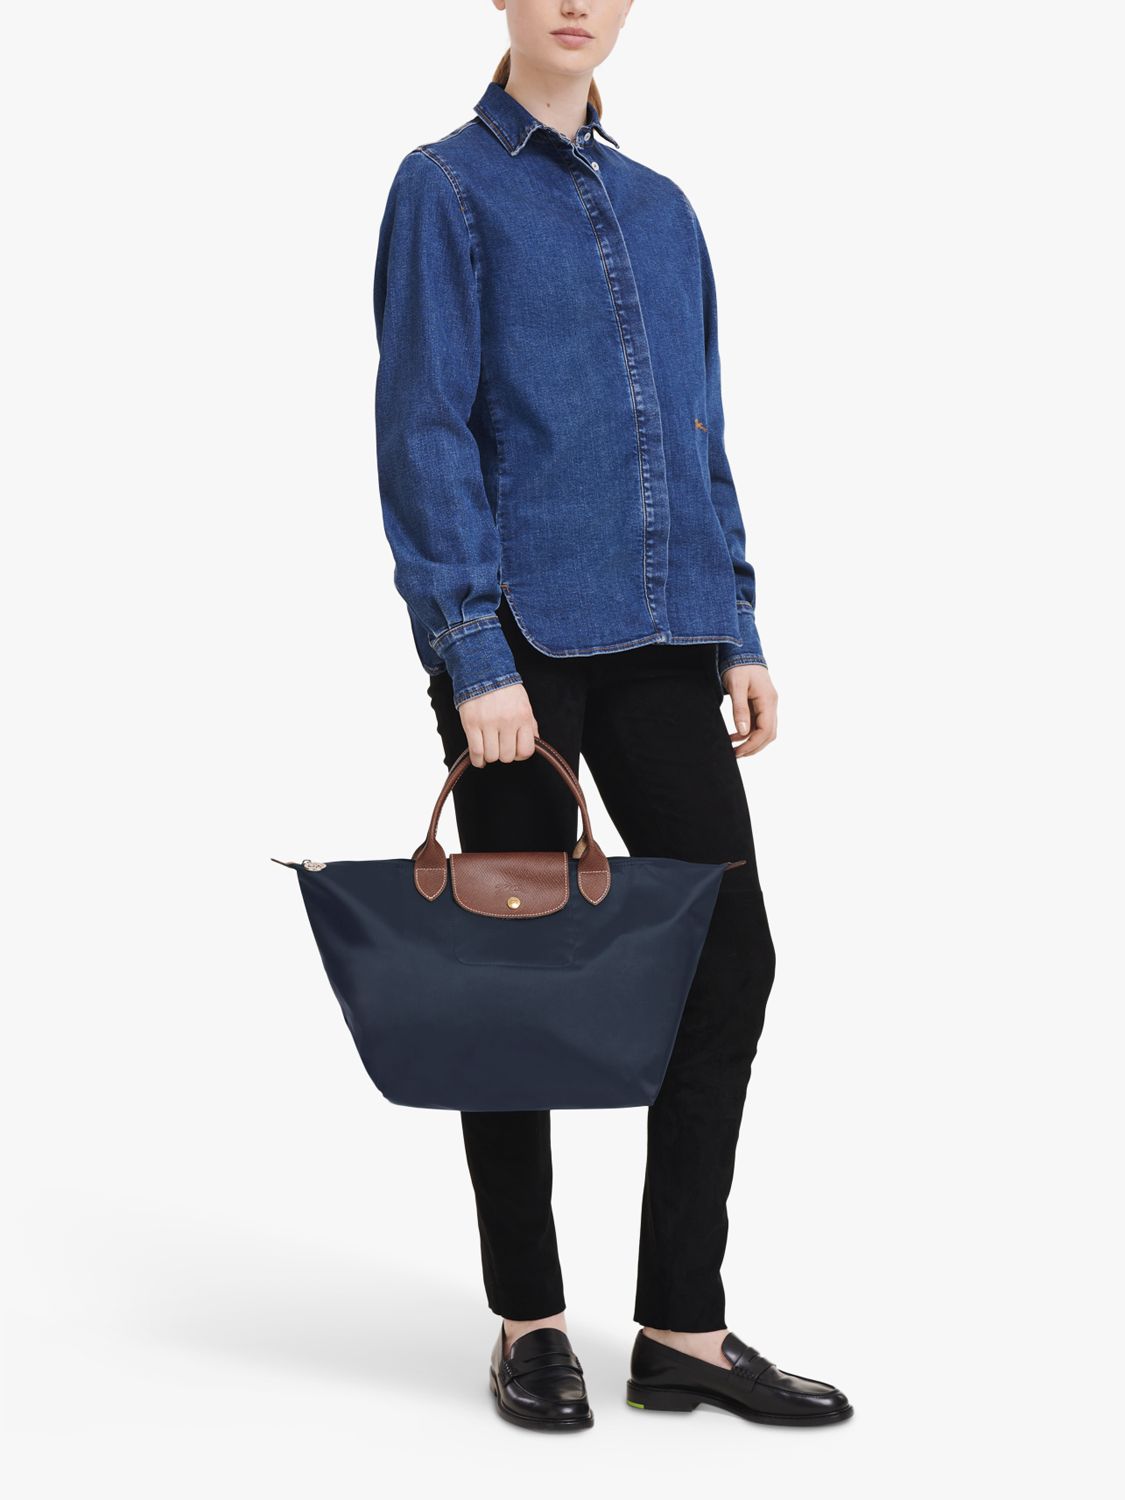 How to Buy Designer Handbags on  - by Kelsey Boyanzhu